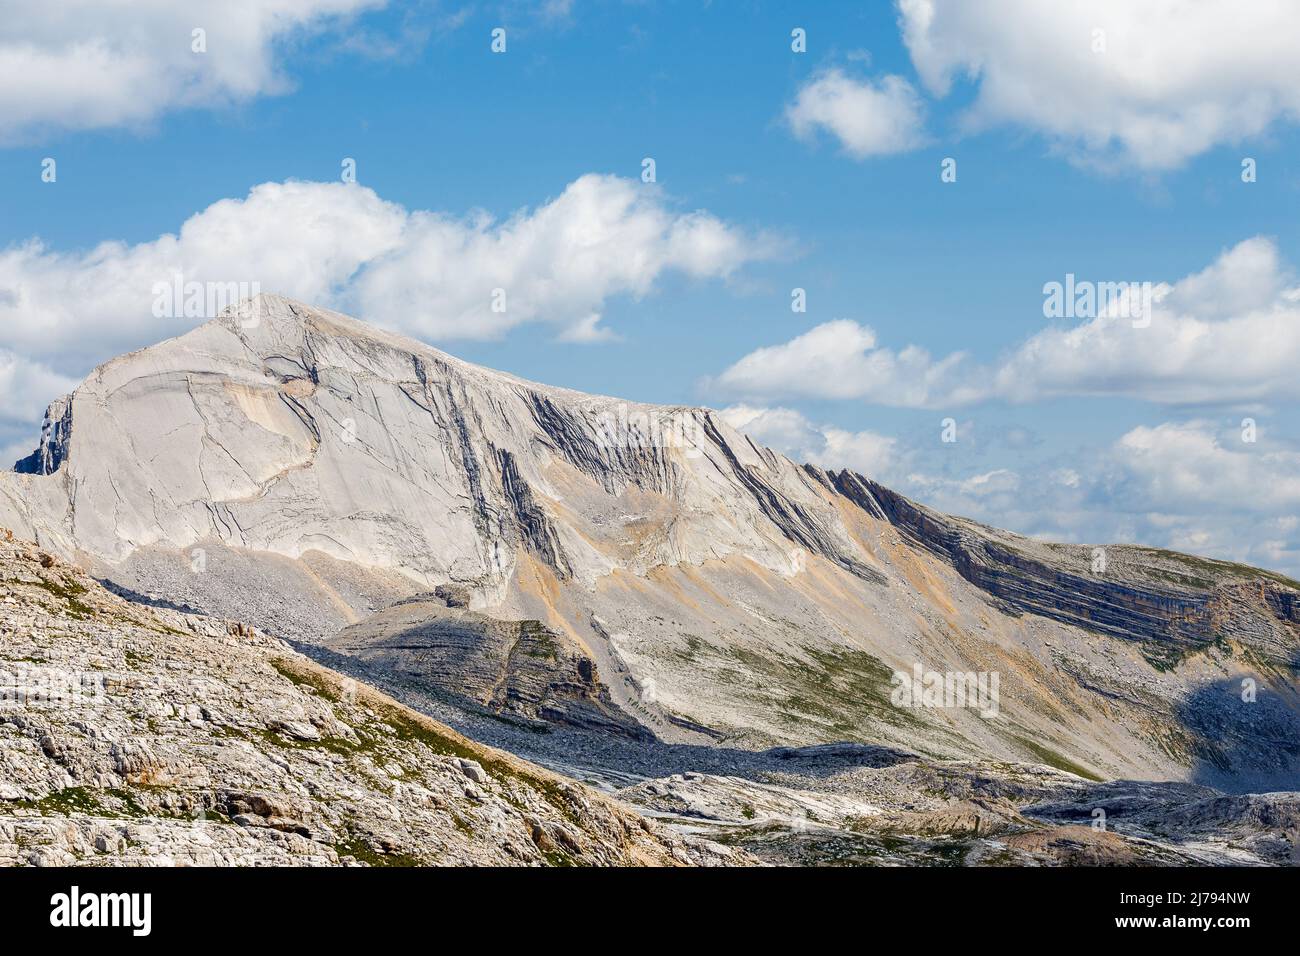 Sasso delle Nove mountain peak in the Fanes - Senes - Braies Natural Park. Sas dla Crusc massif. The Dolomites. Italian Alps. Europe. Stock Photo